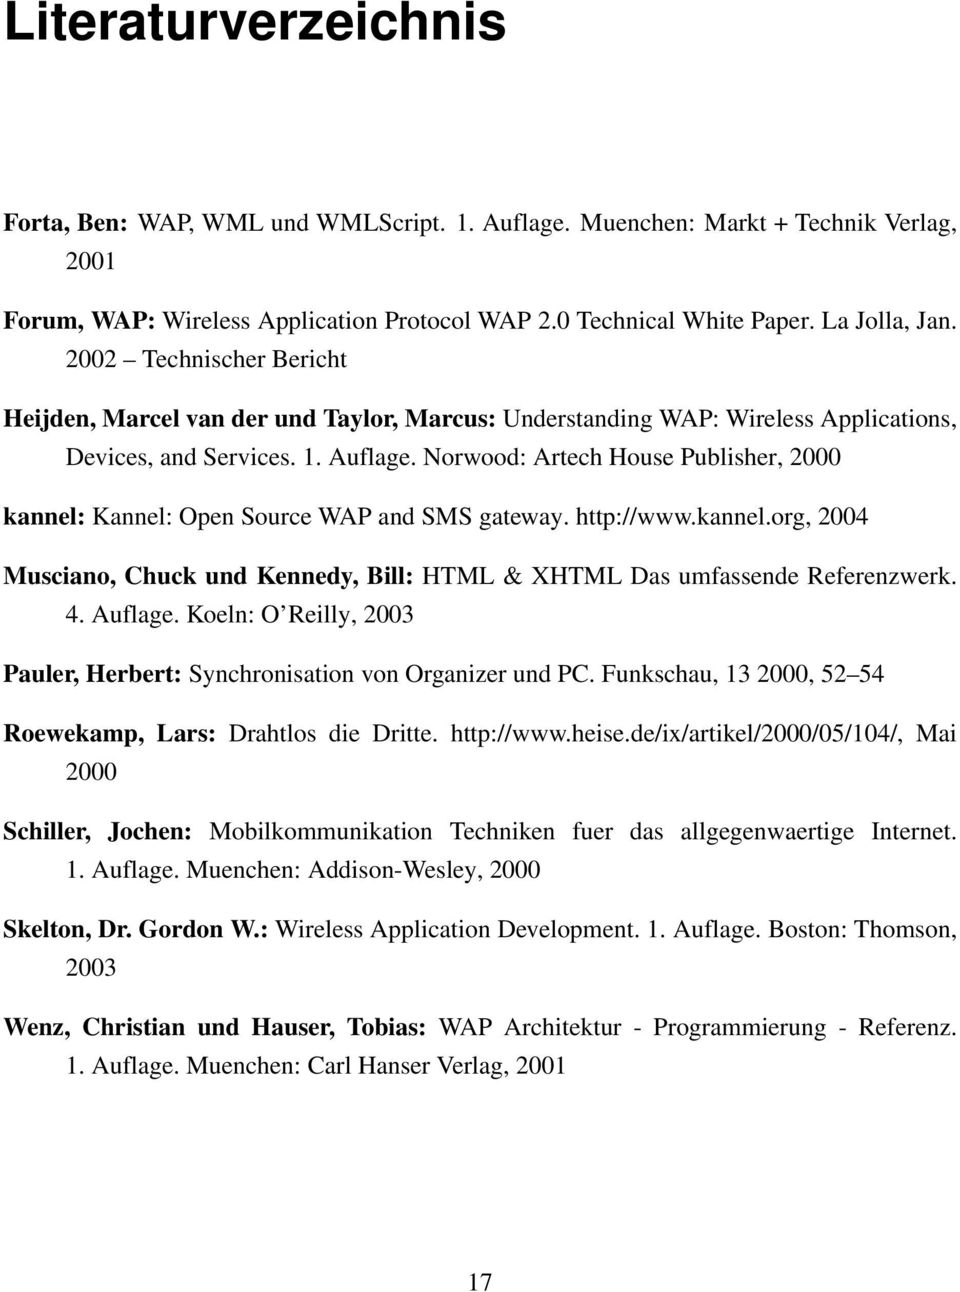 Norwood: Artech House Publisher, 2000 kannel: Kannel: Open Source WAP and SMS gateway. http://www.kannel.org, 2004 Musciano, Chuck und Kennedy, Bill: HTML & XHTML Das umfassende Referenzwerk. 4.